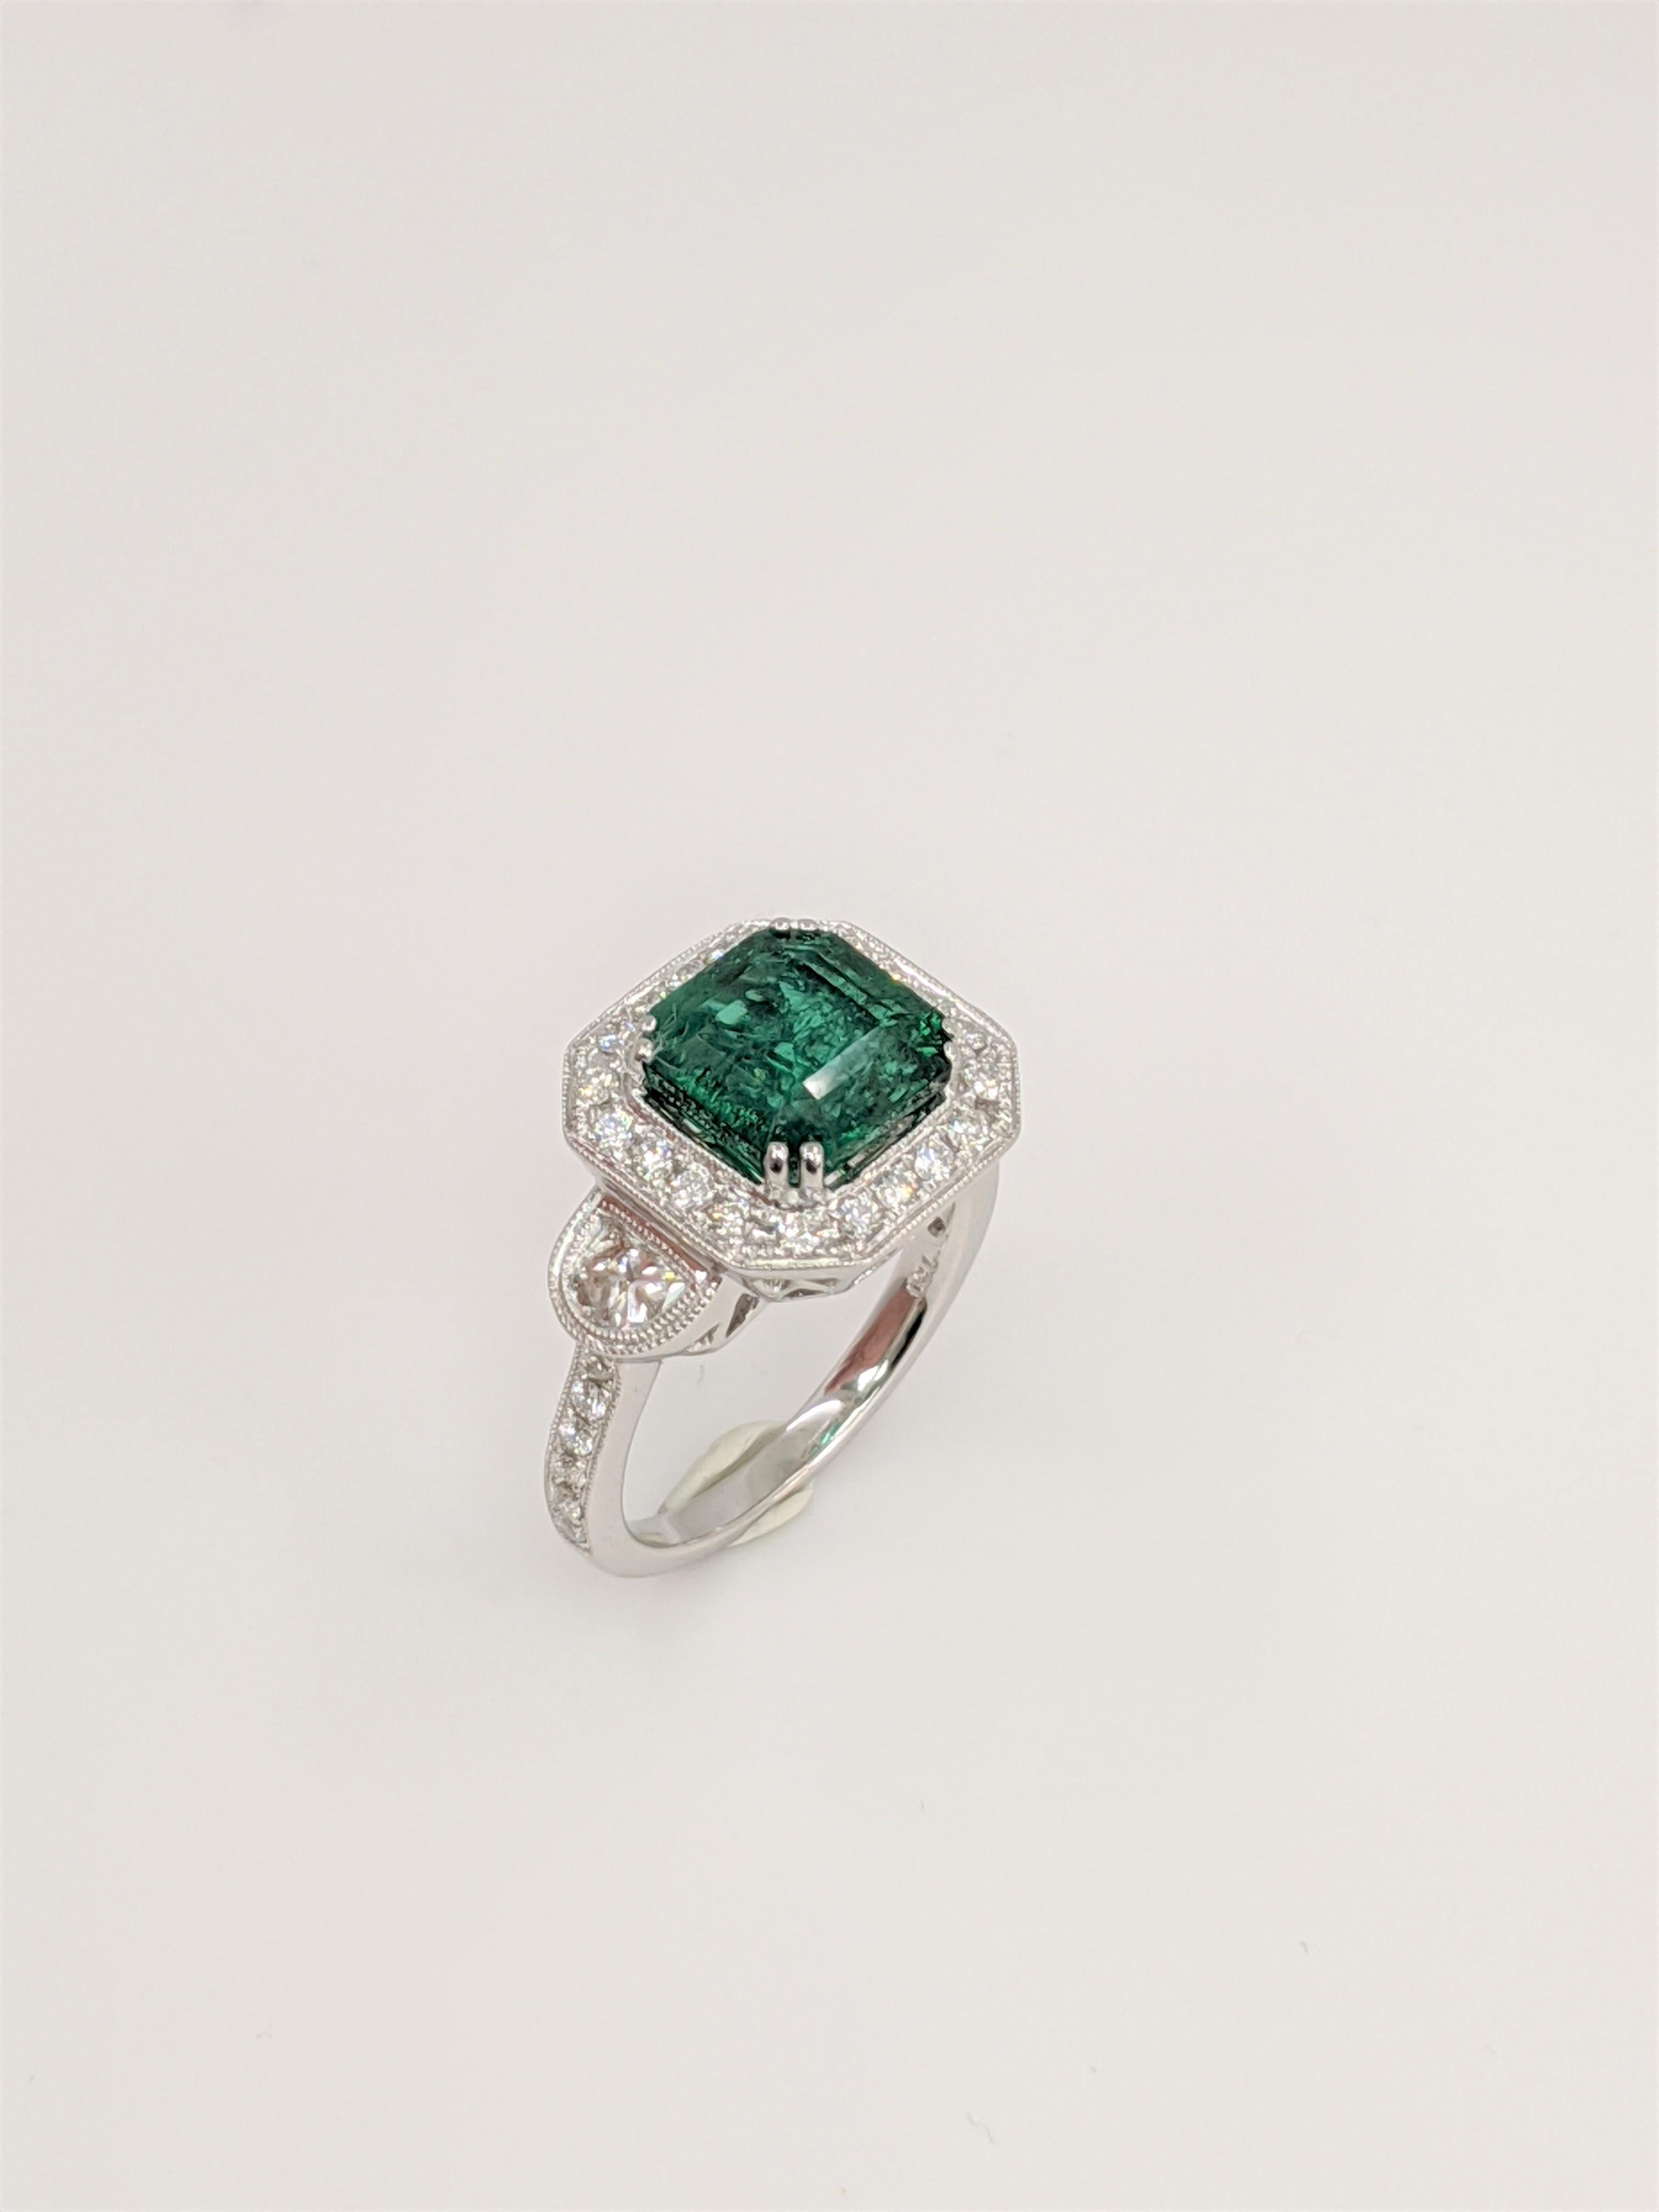 3 Stone Style, Emerald, White Diamond, 18k White Gold, Ring
Emerald  3.36 carats,  8.5 x8.5 mm
Diamonds  .87 carats